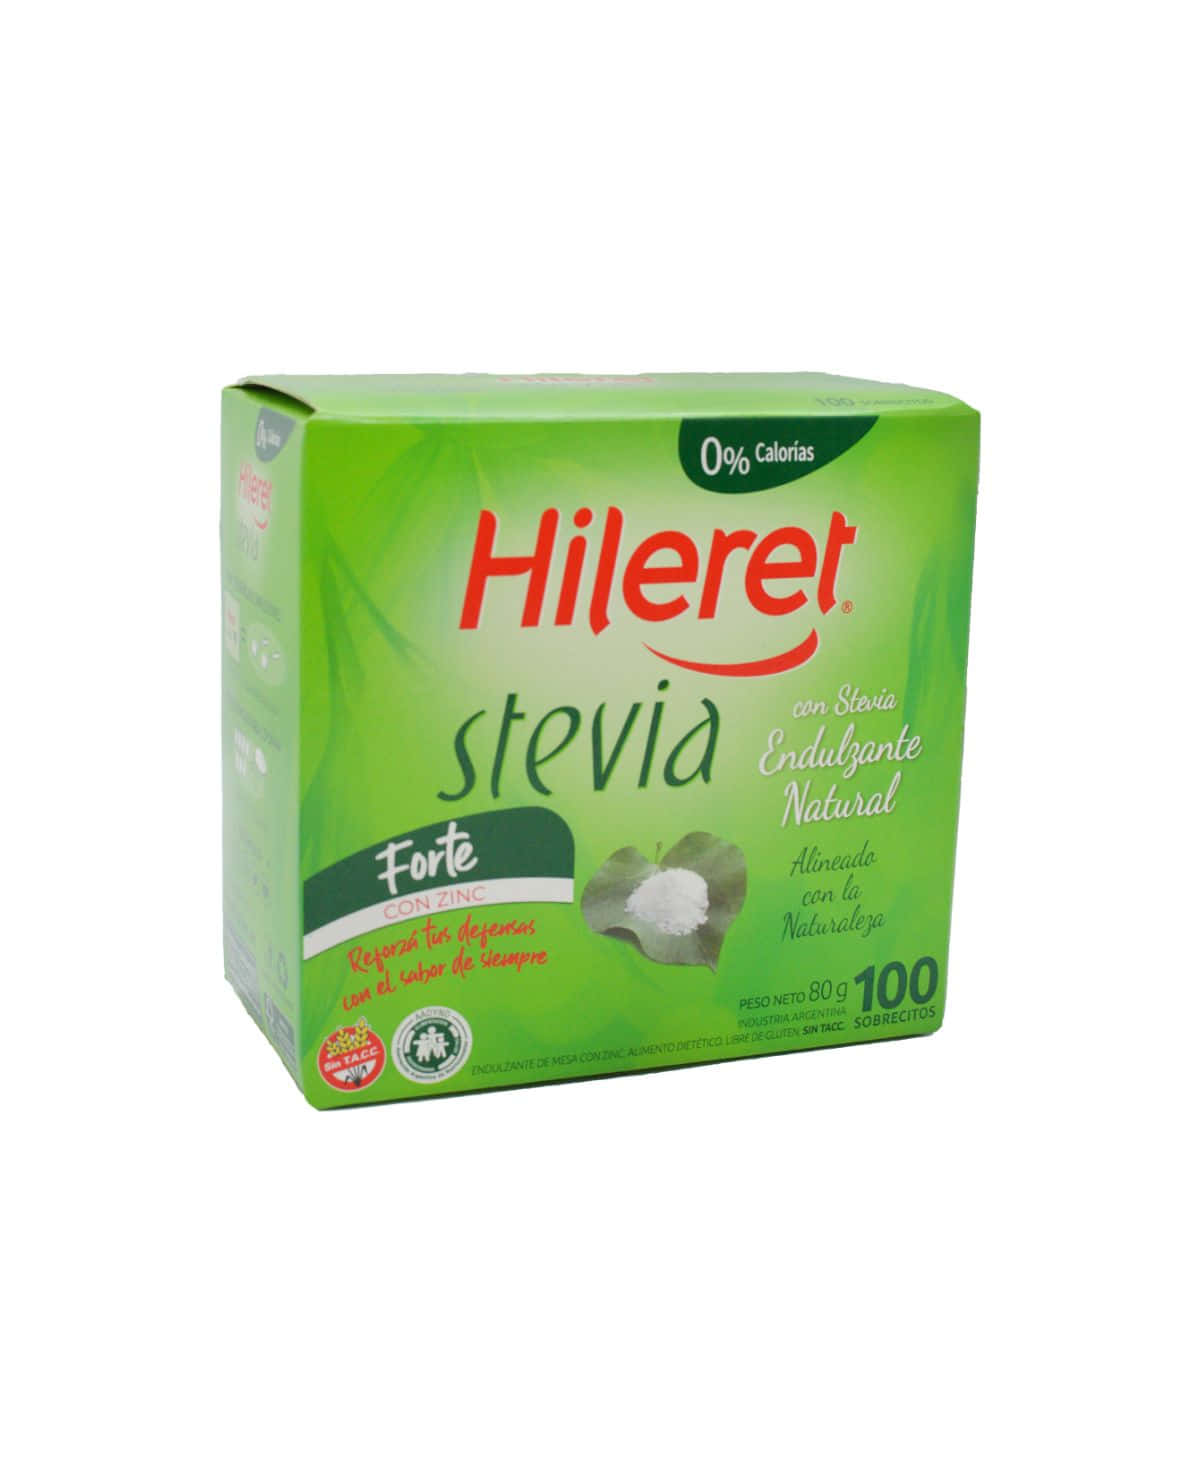 Edulcorante Hileret Stevia 100 Sobres